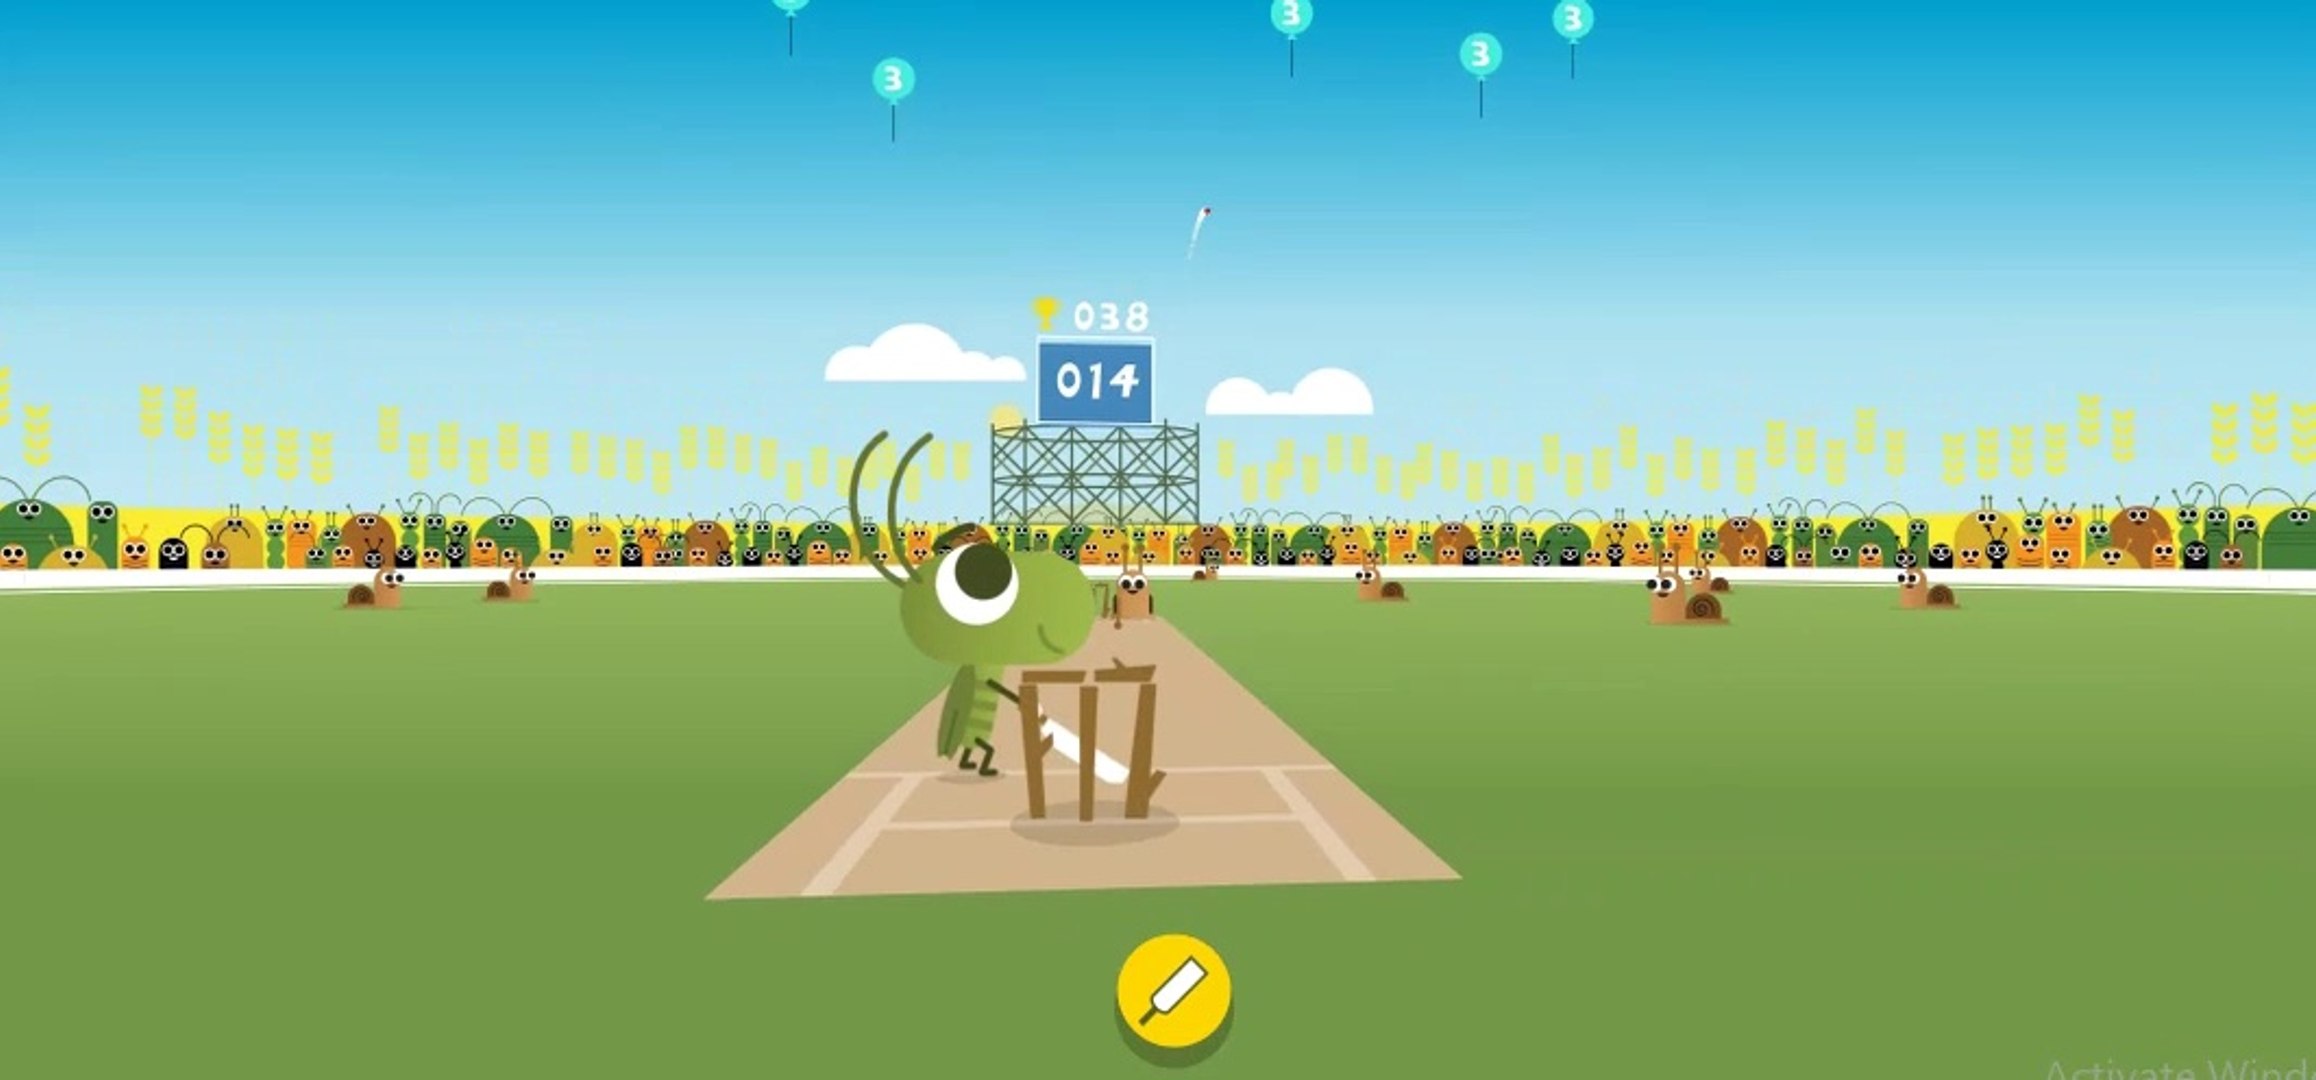 My best score on google doodle cricket!